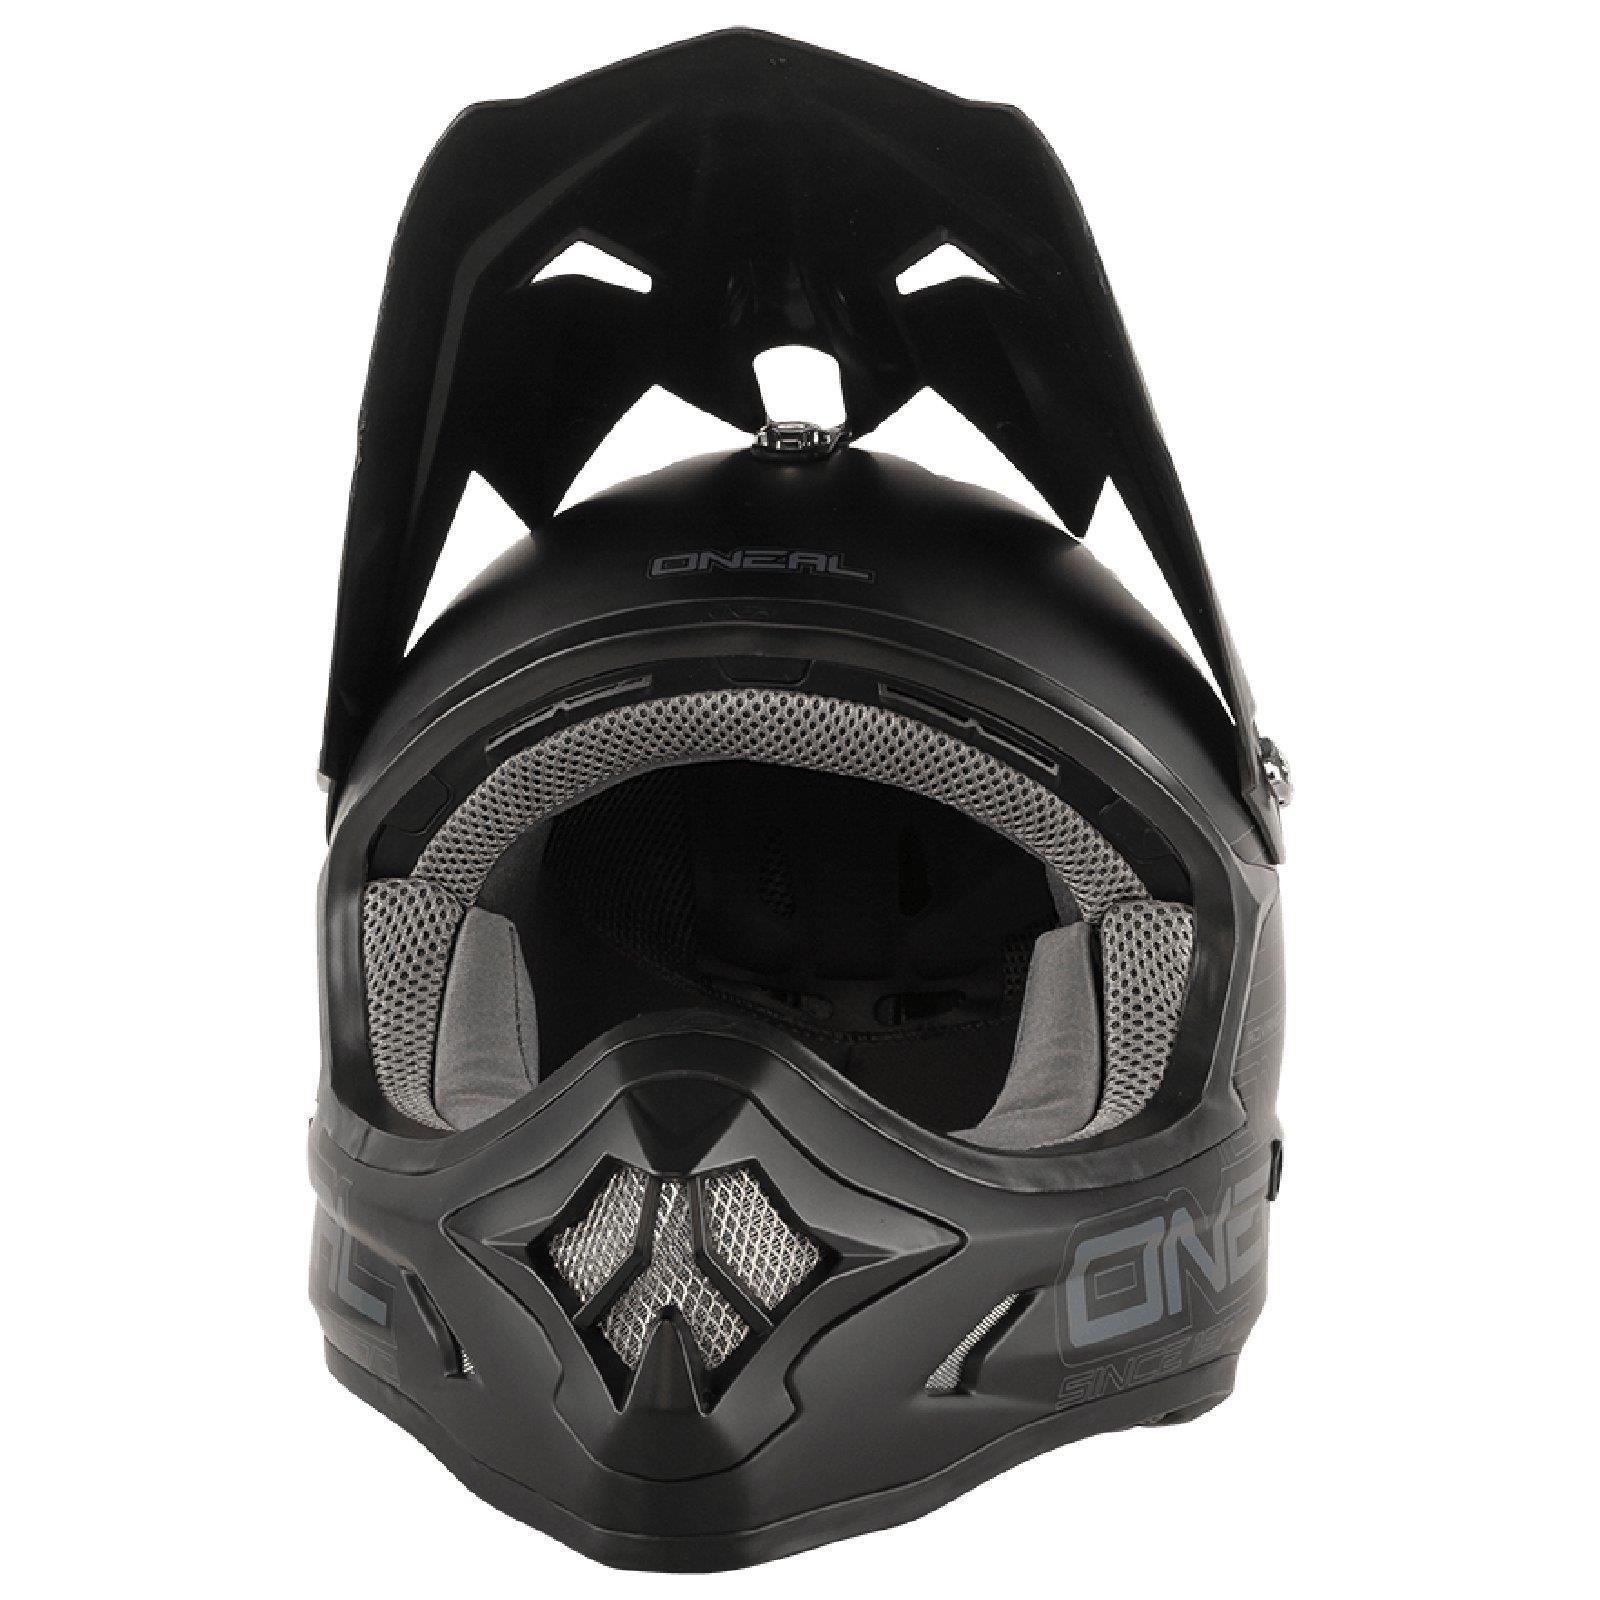 O'Neal 3SRS MX Helmet Flat Black Matt Enduro Moto Cross Motorcycle